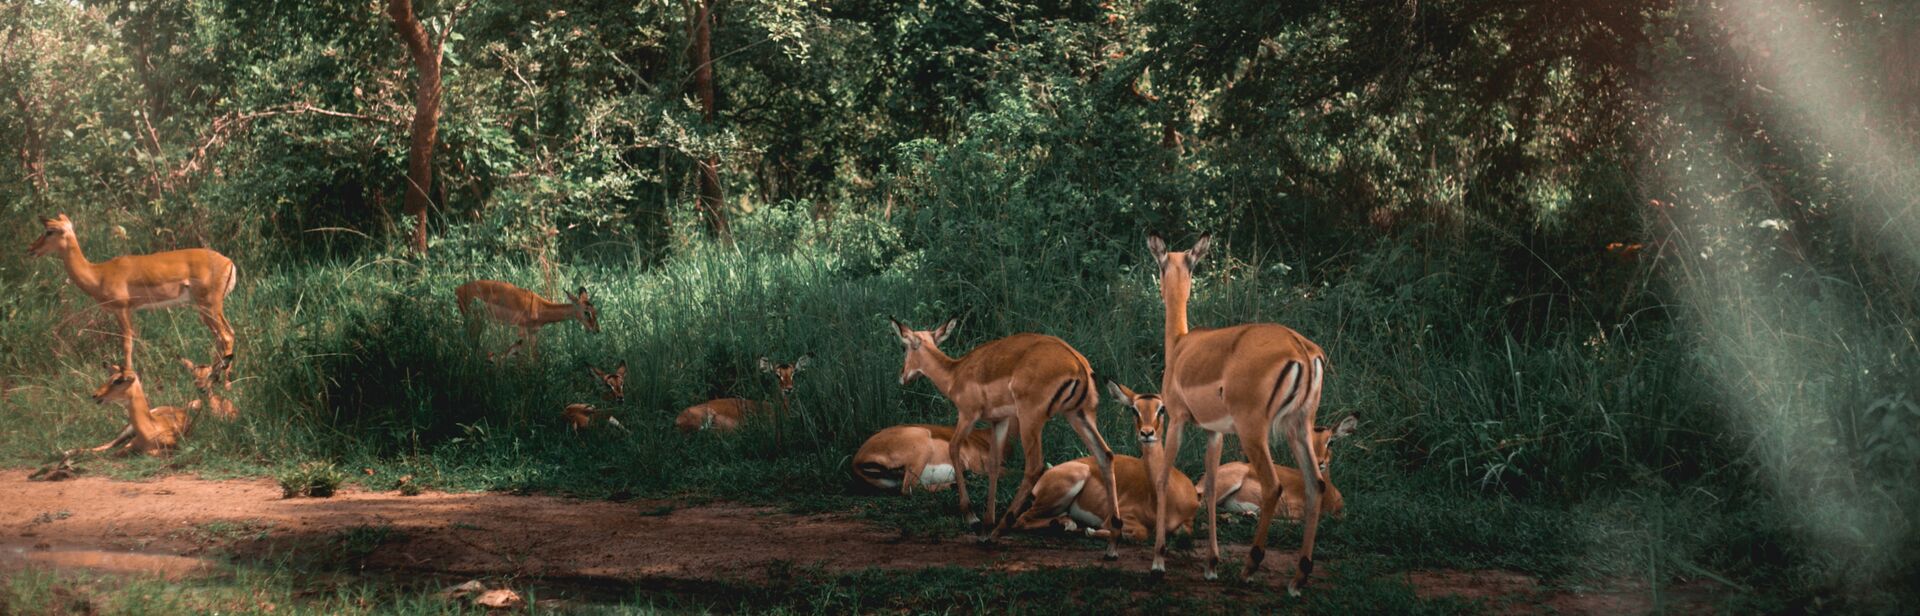 akagera national park in rwanda